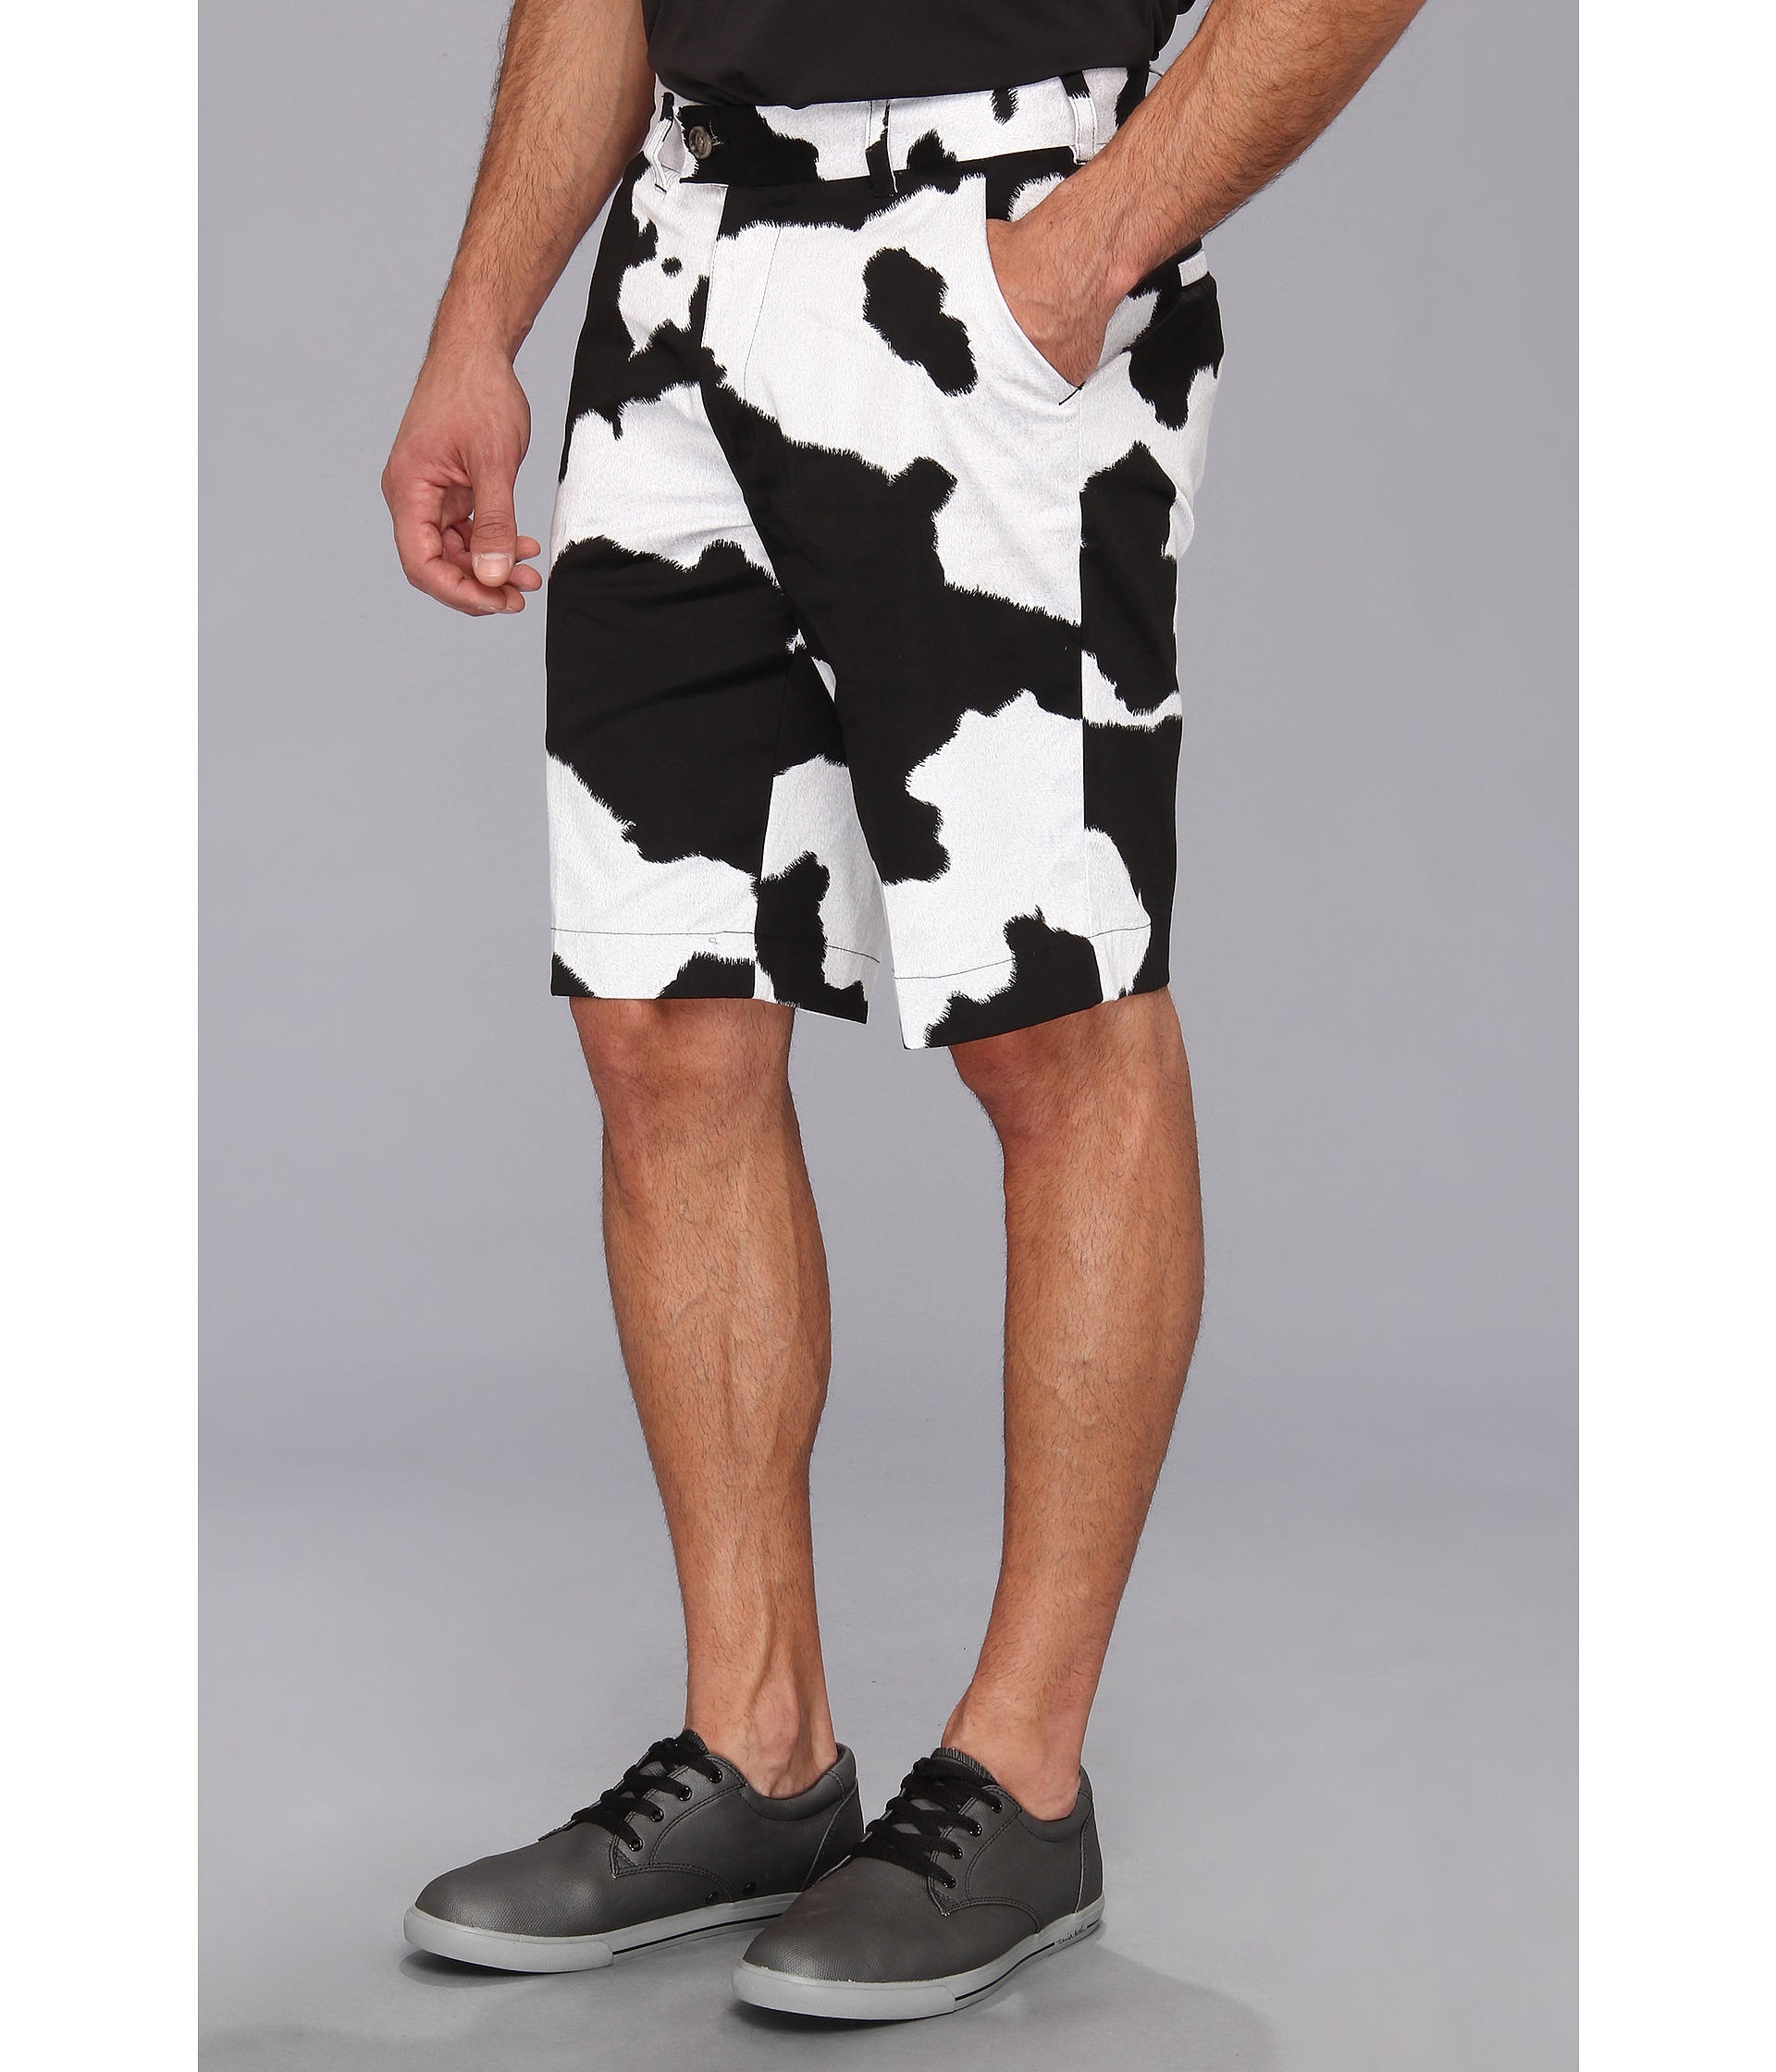 Loudmouth Golf Cowz Shorts Black White